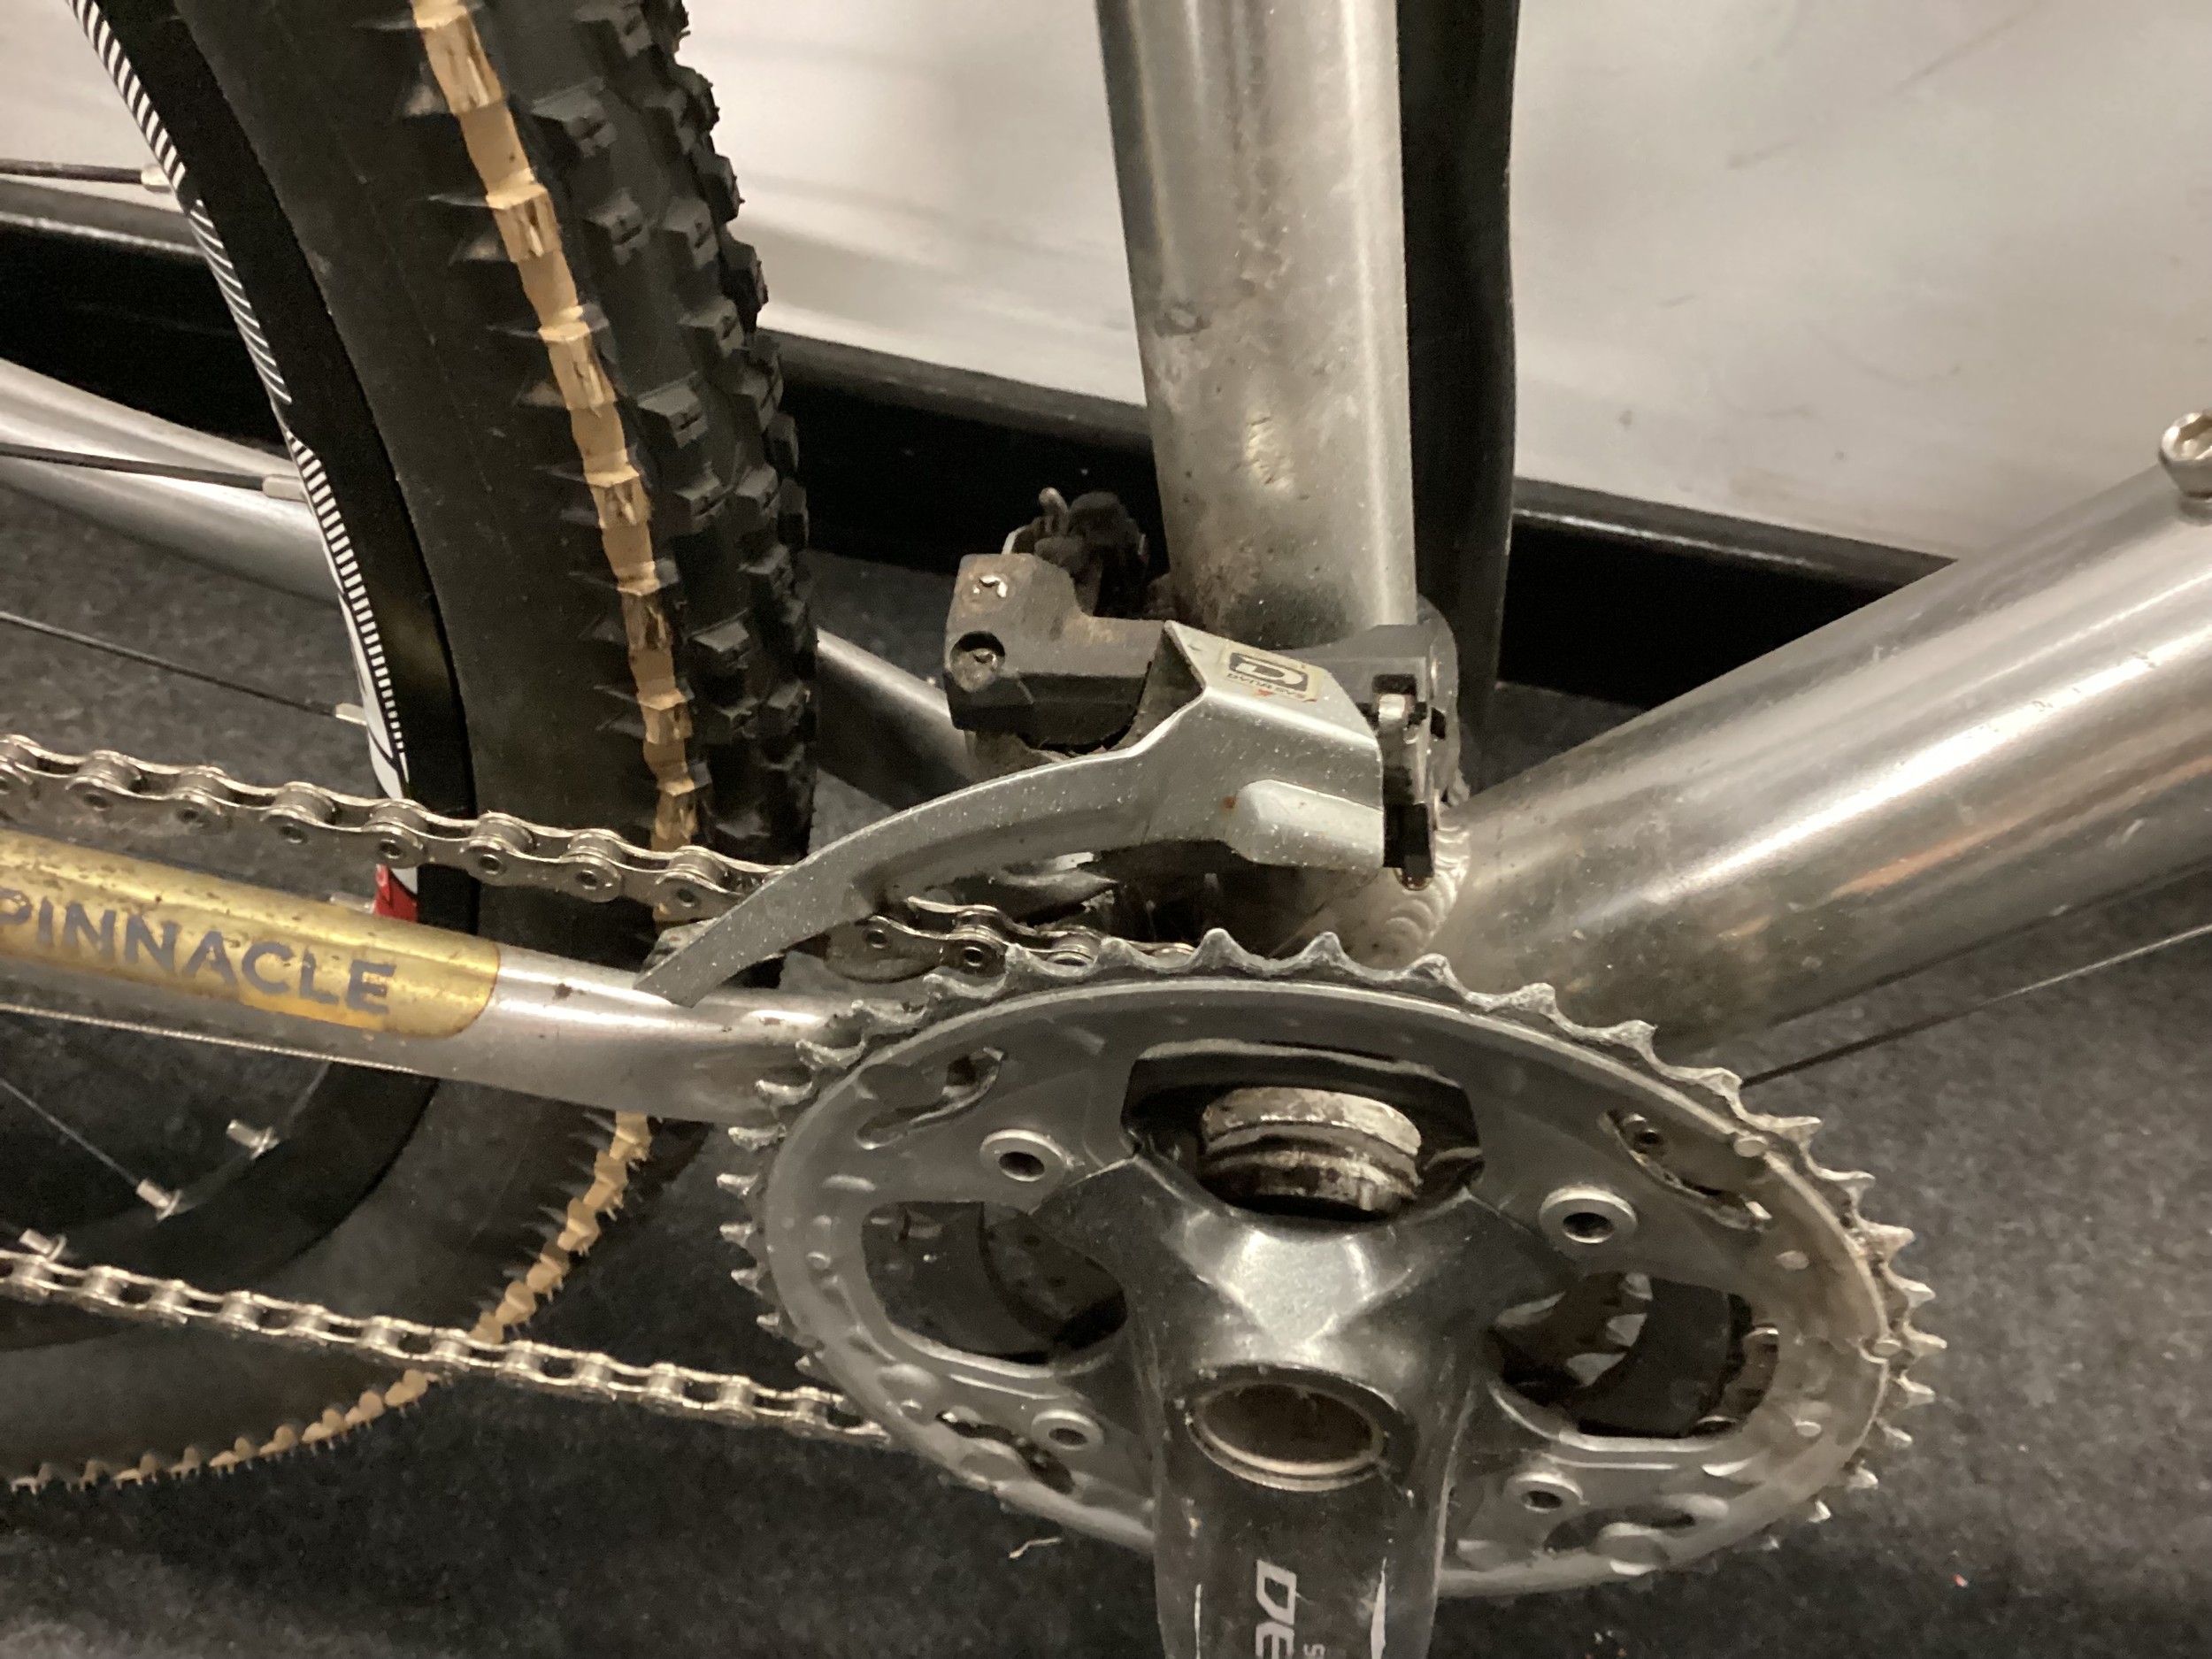 Silver Pinnacle mountain bike 30 gears 16" frame size 26" wheel size (REF 16B). - Image 3 of 4